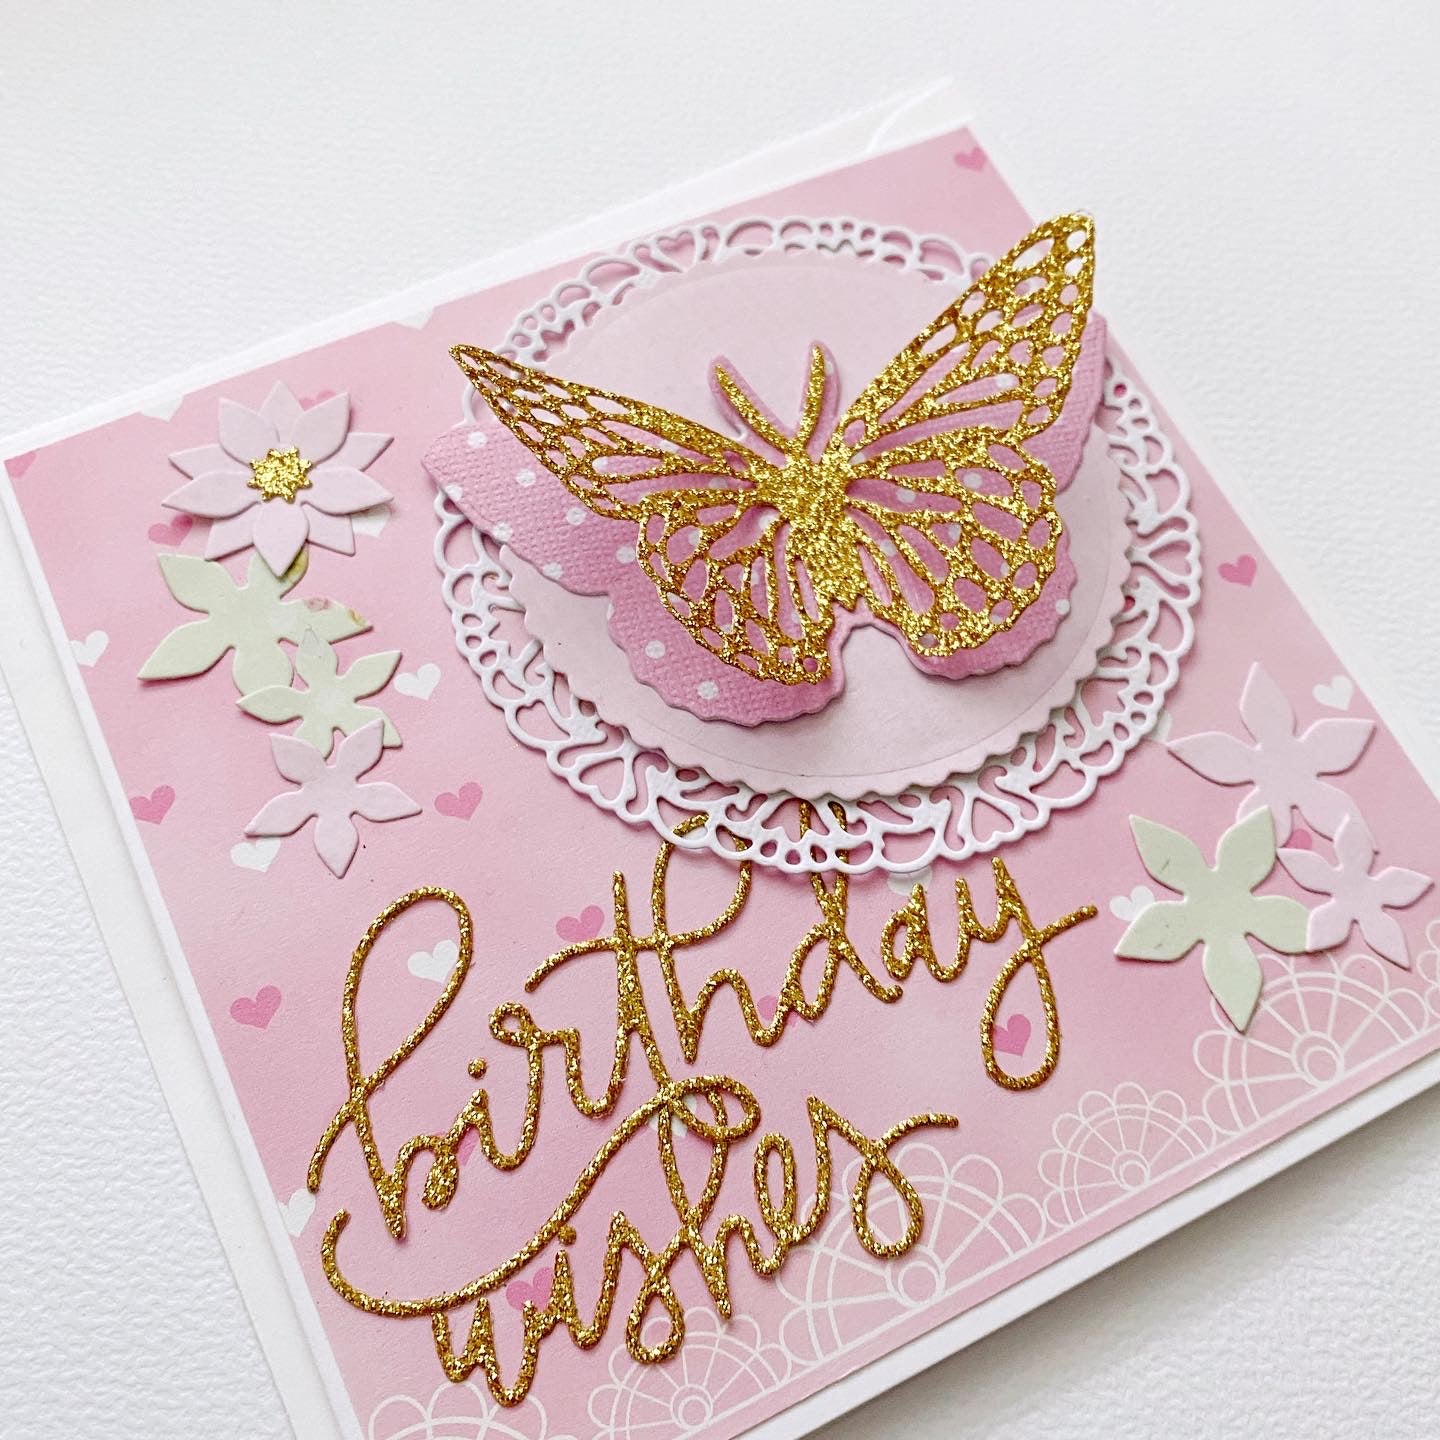 Butterfly birthday card.